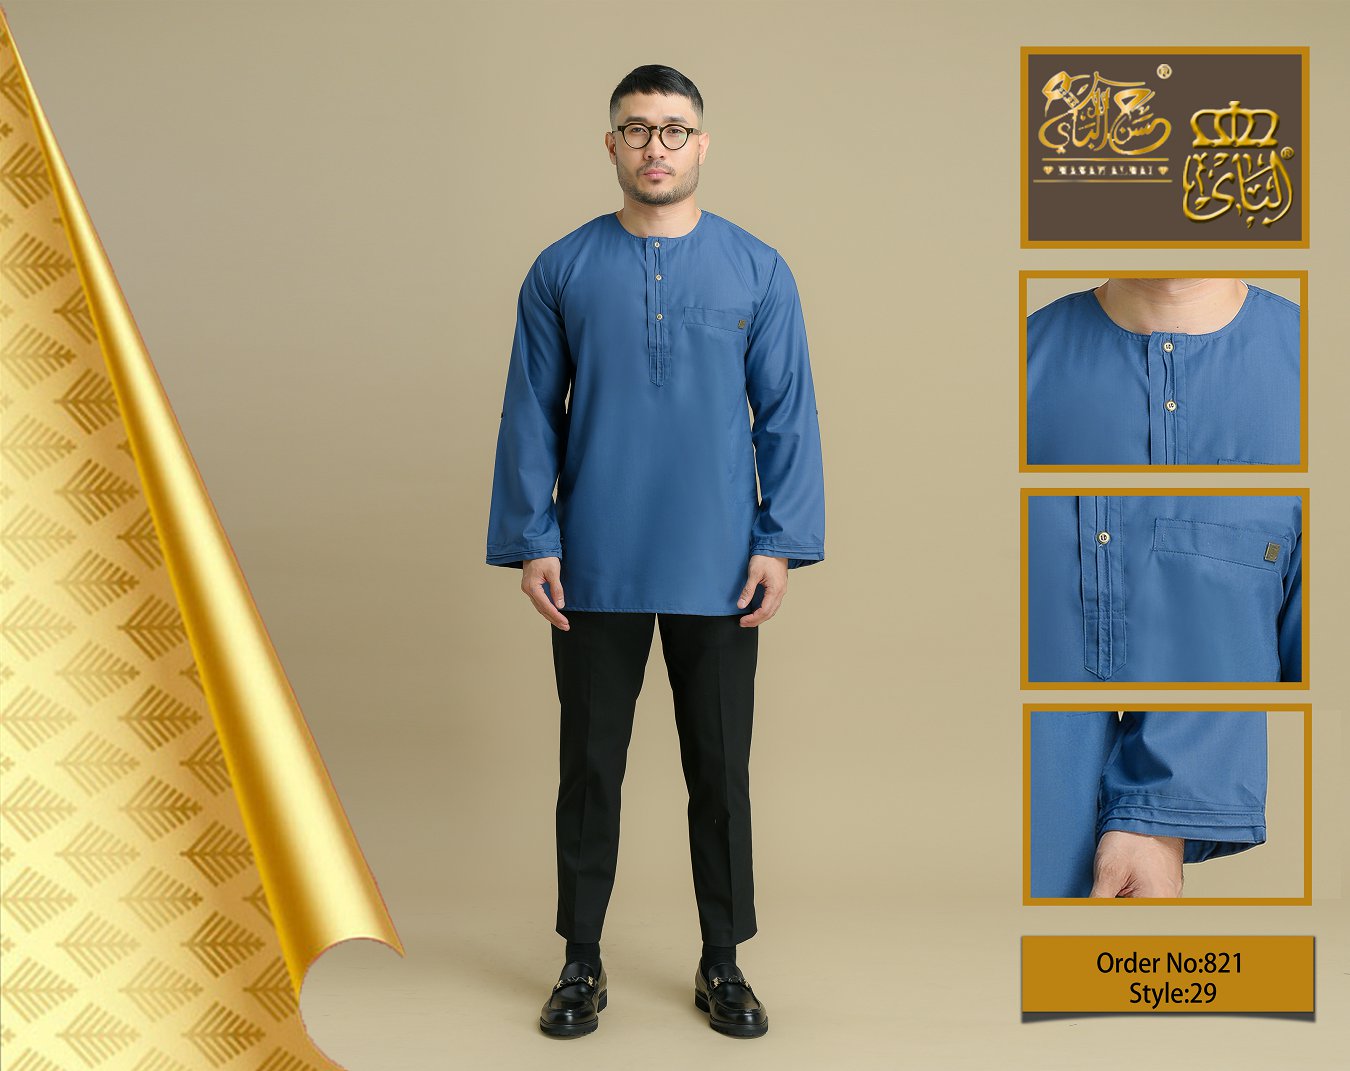 Malay clothing70